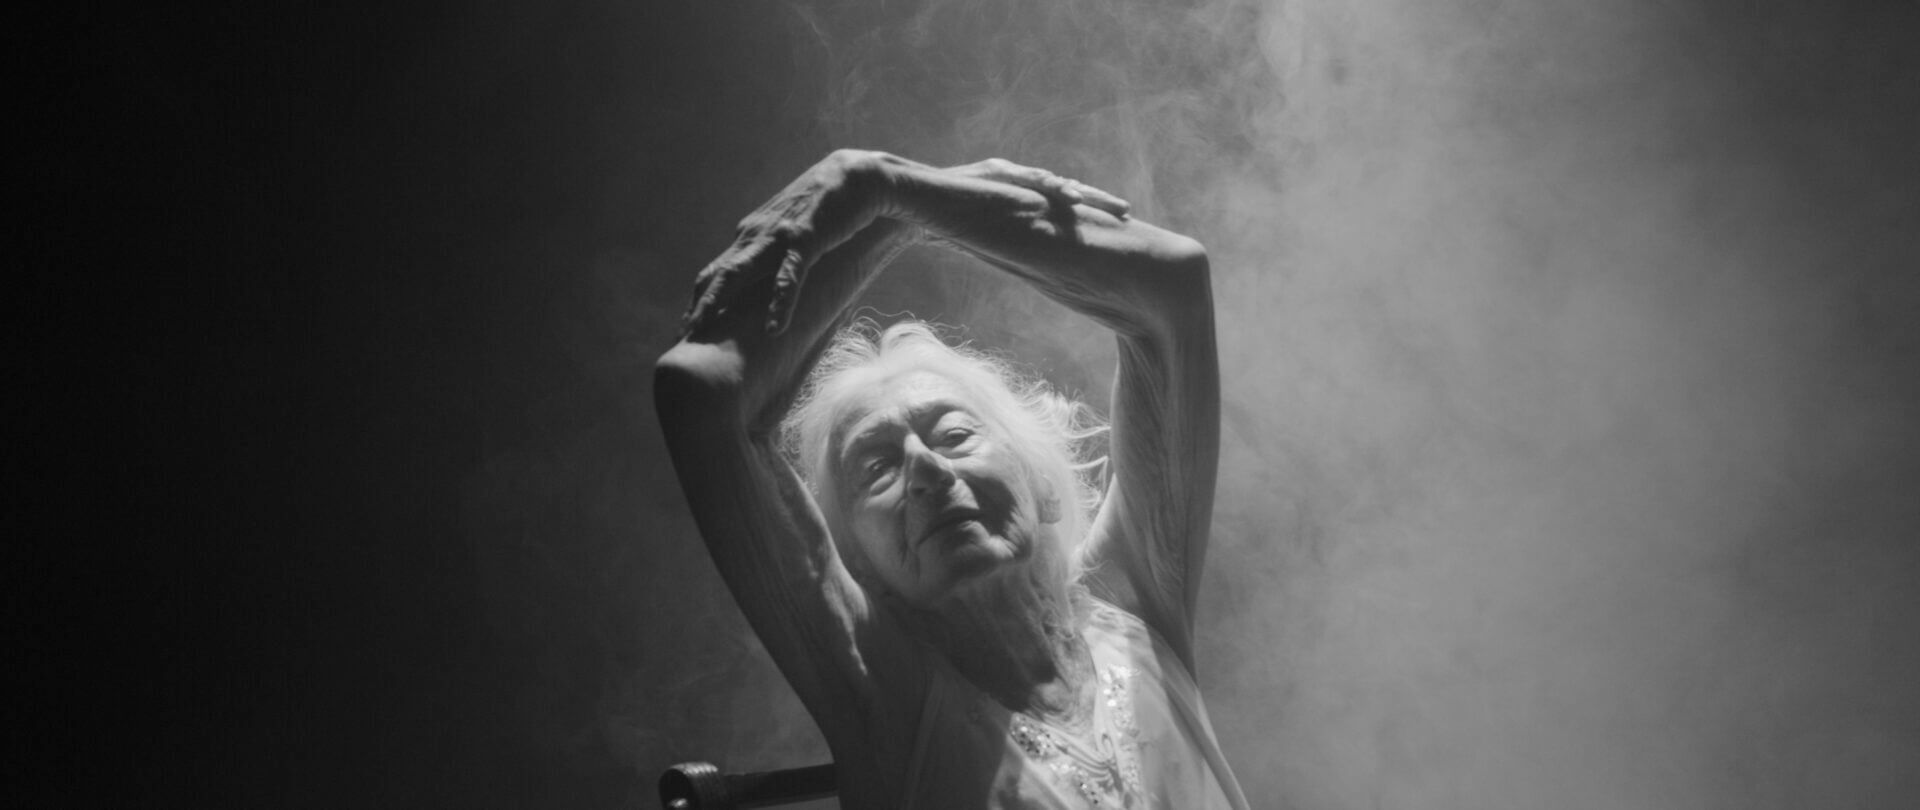 An image of an Eileen Kramer dancing with her hands above her head.